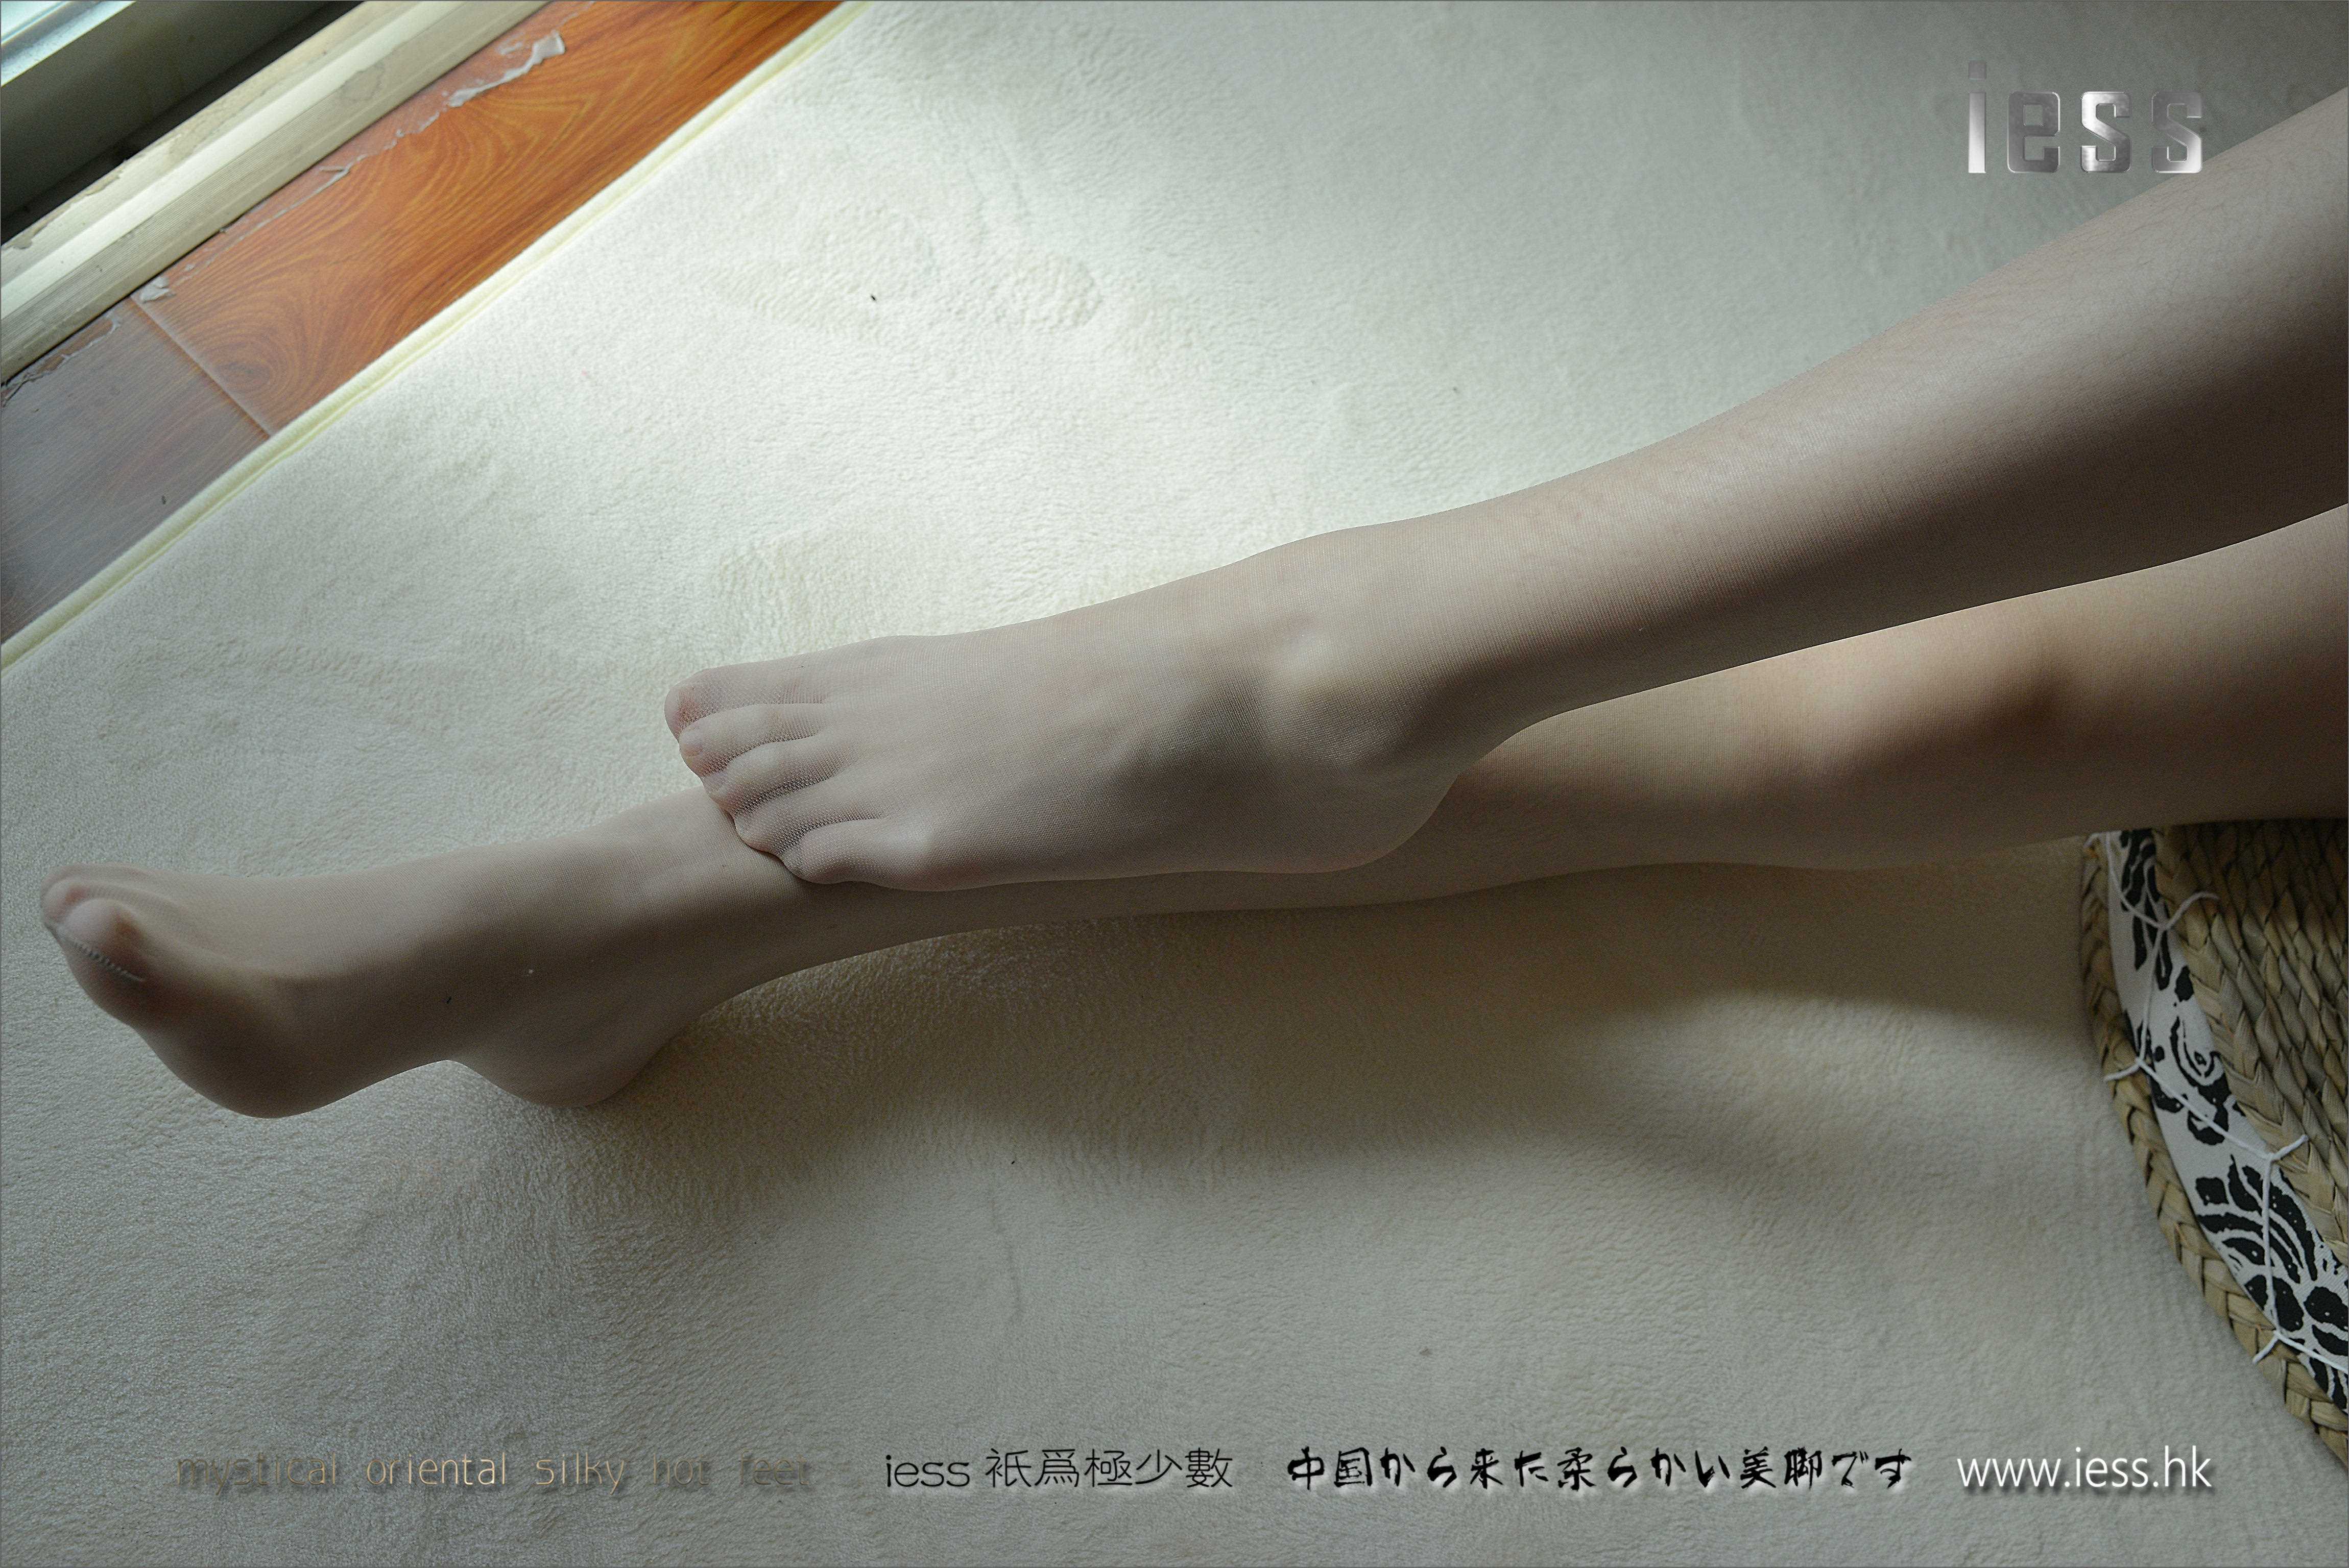 China Beauty Legs and feet 195